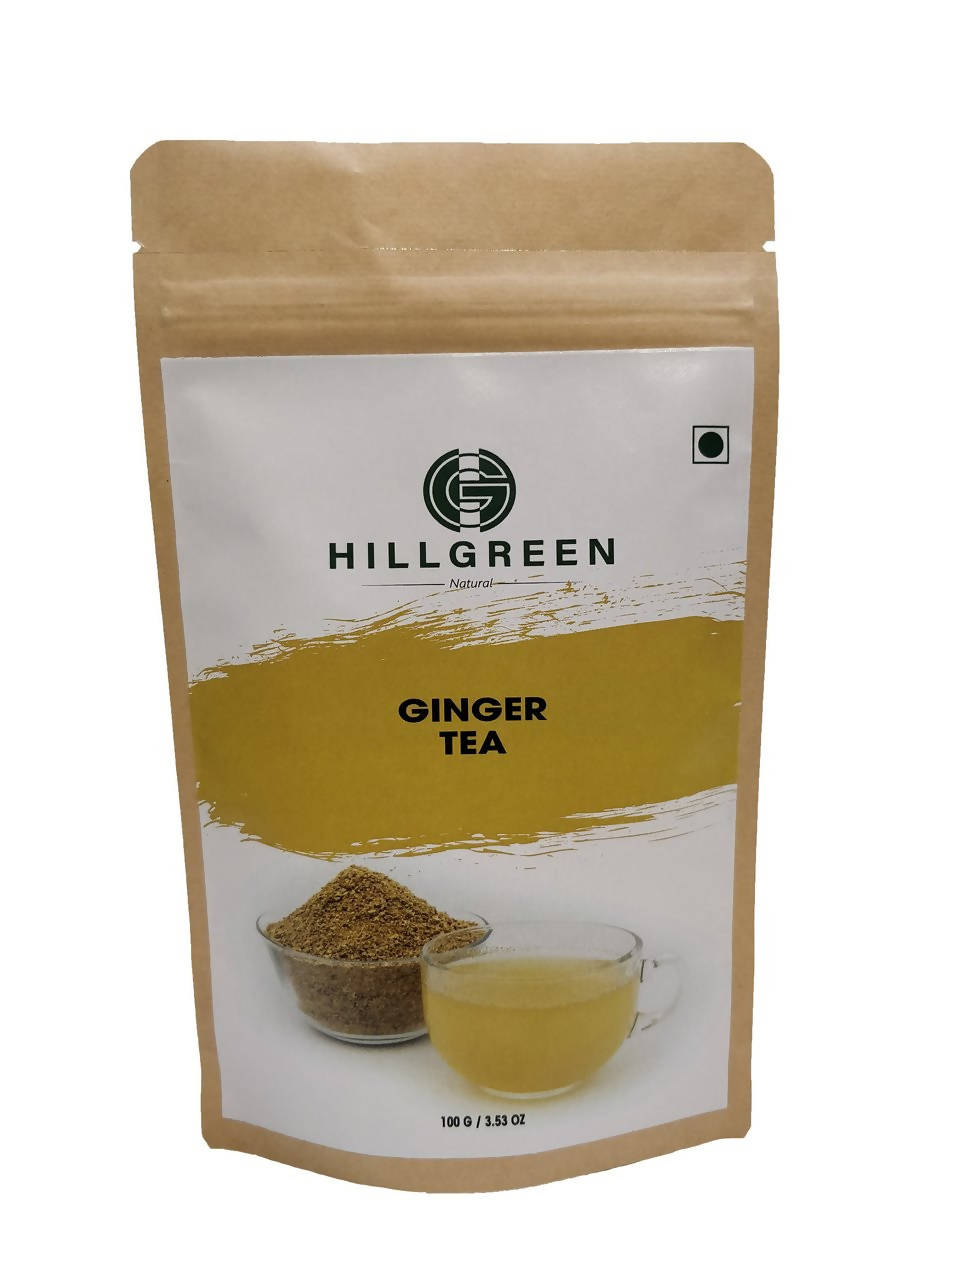 Hillgreen Natural Ginger Tea - buy in USA, Australia, Canada